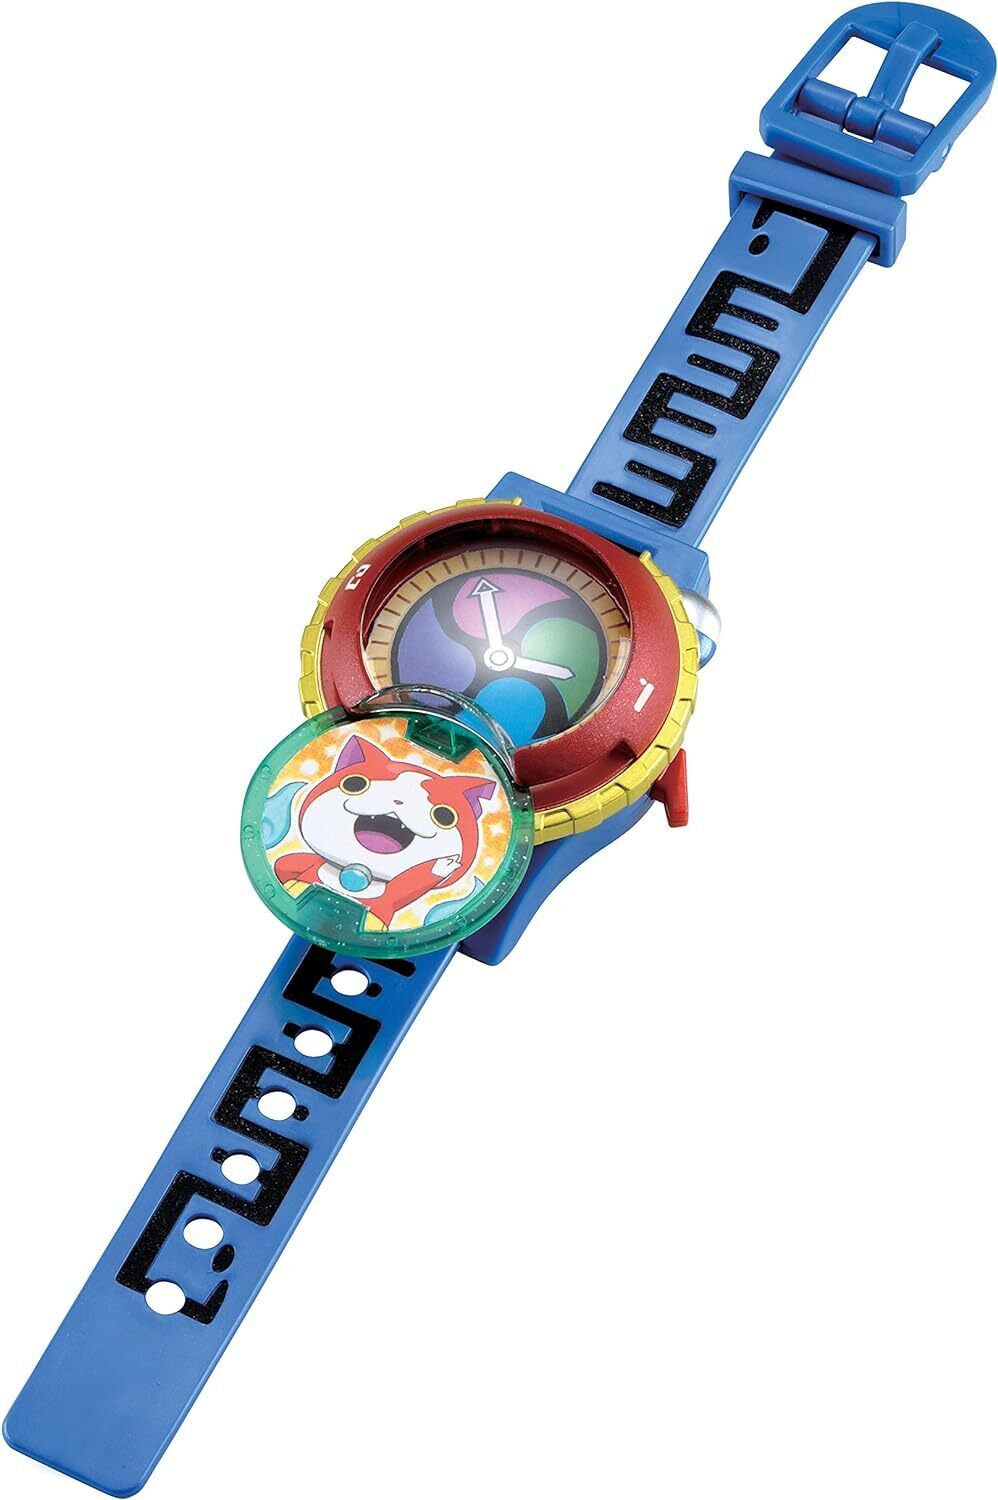 Yo-Kai Watch Characchi Yo-Kai Watch Zero Type